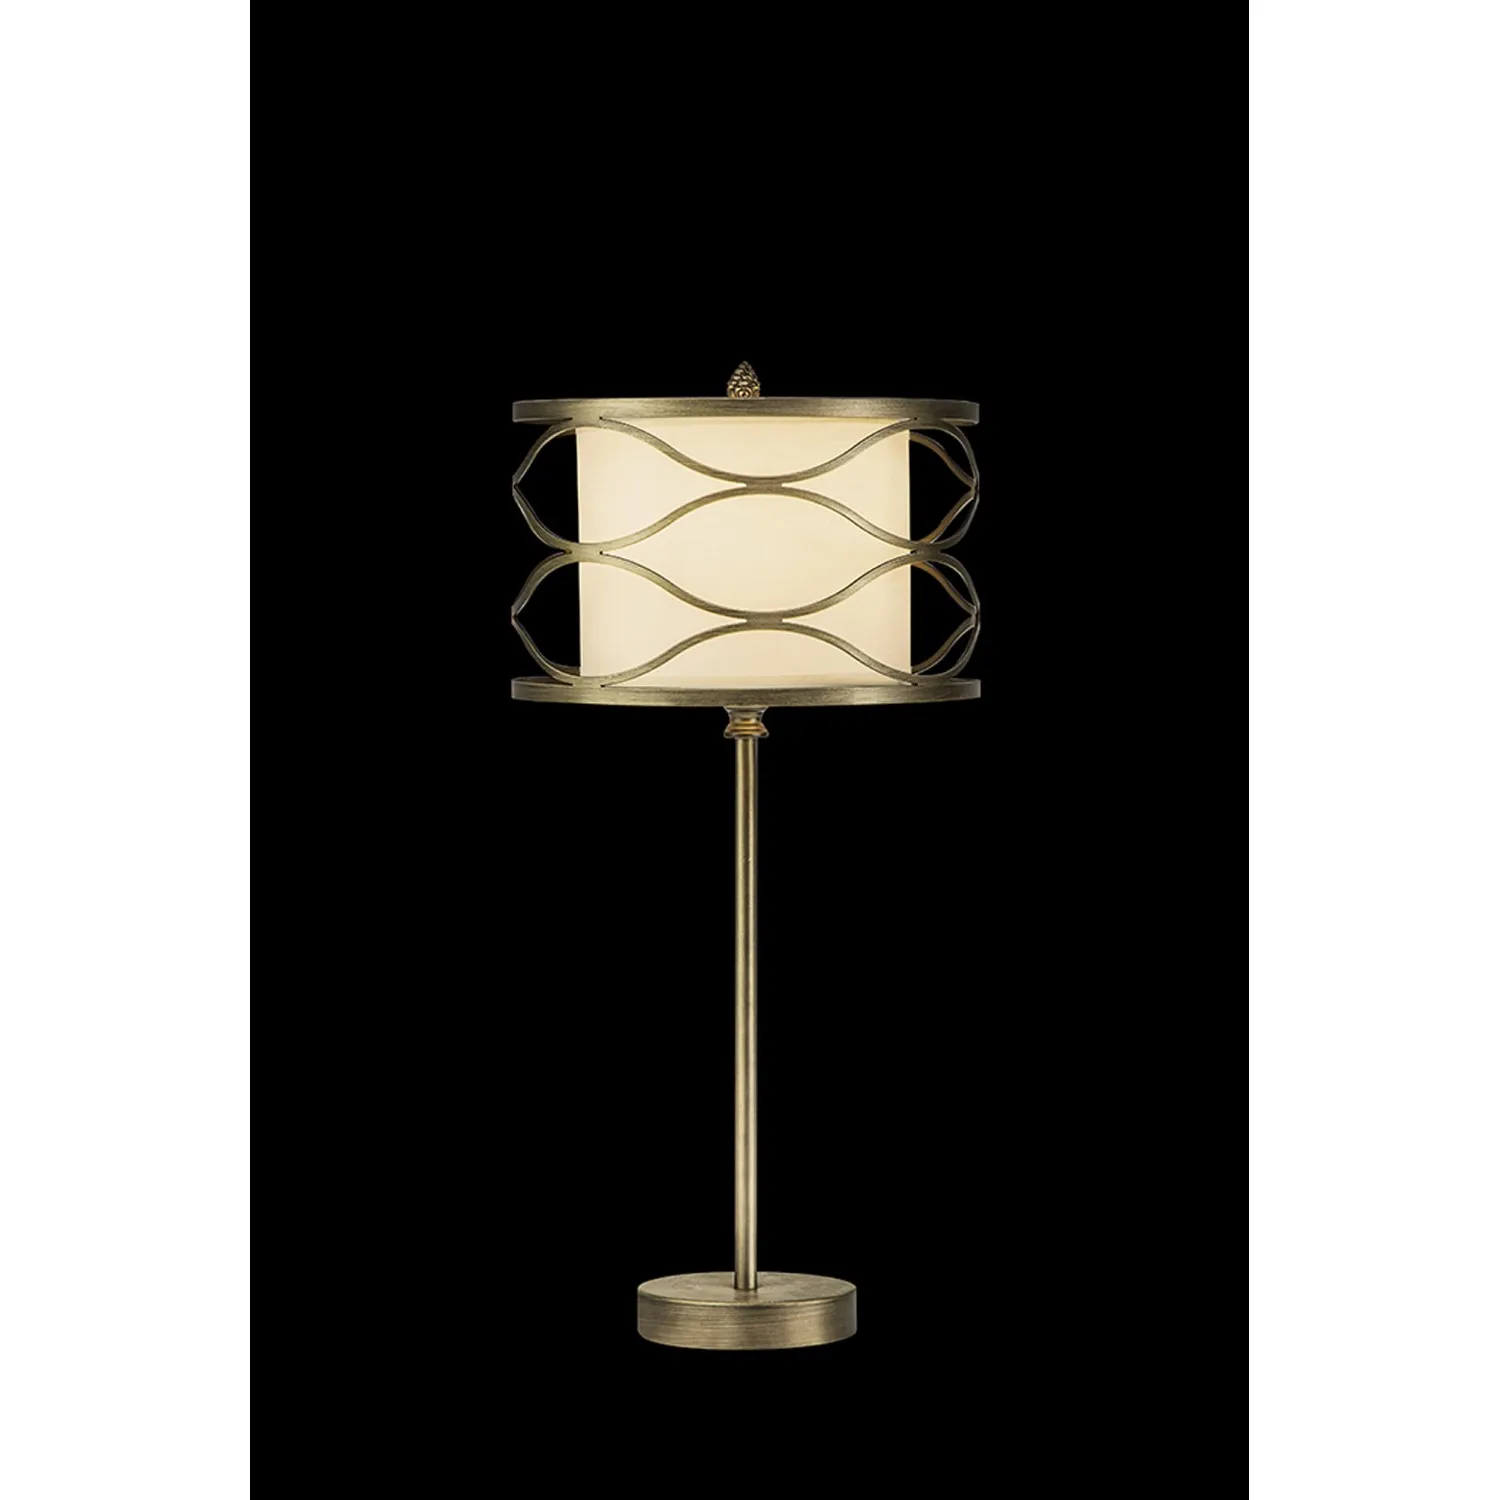 Hornsey Table Lamp 1 Light E27 Aged Gold Cream Fabric Shade